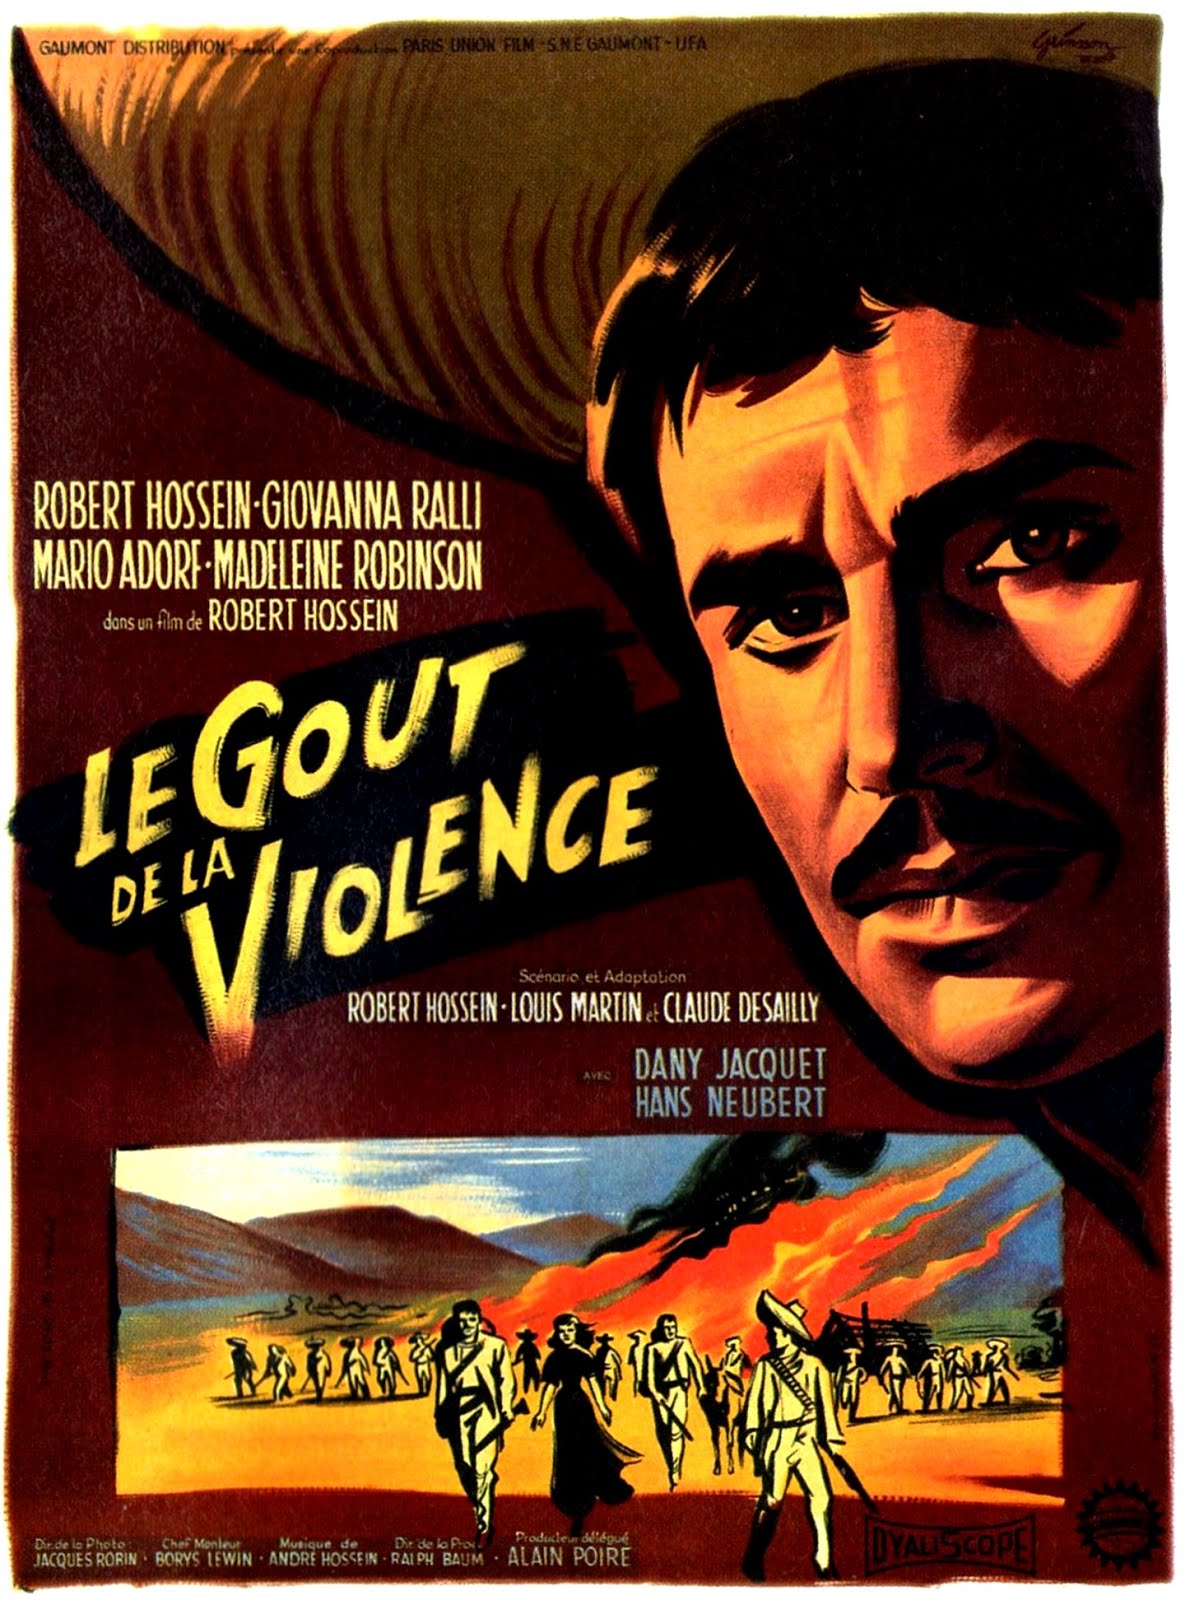 Le goût de la violence (1960) Robert Hossein - Le goût de la violence